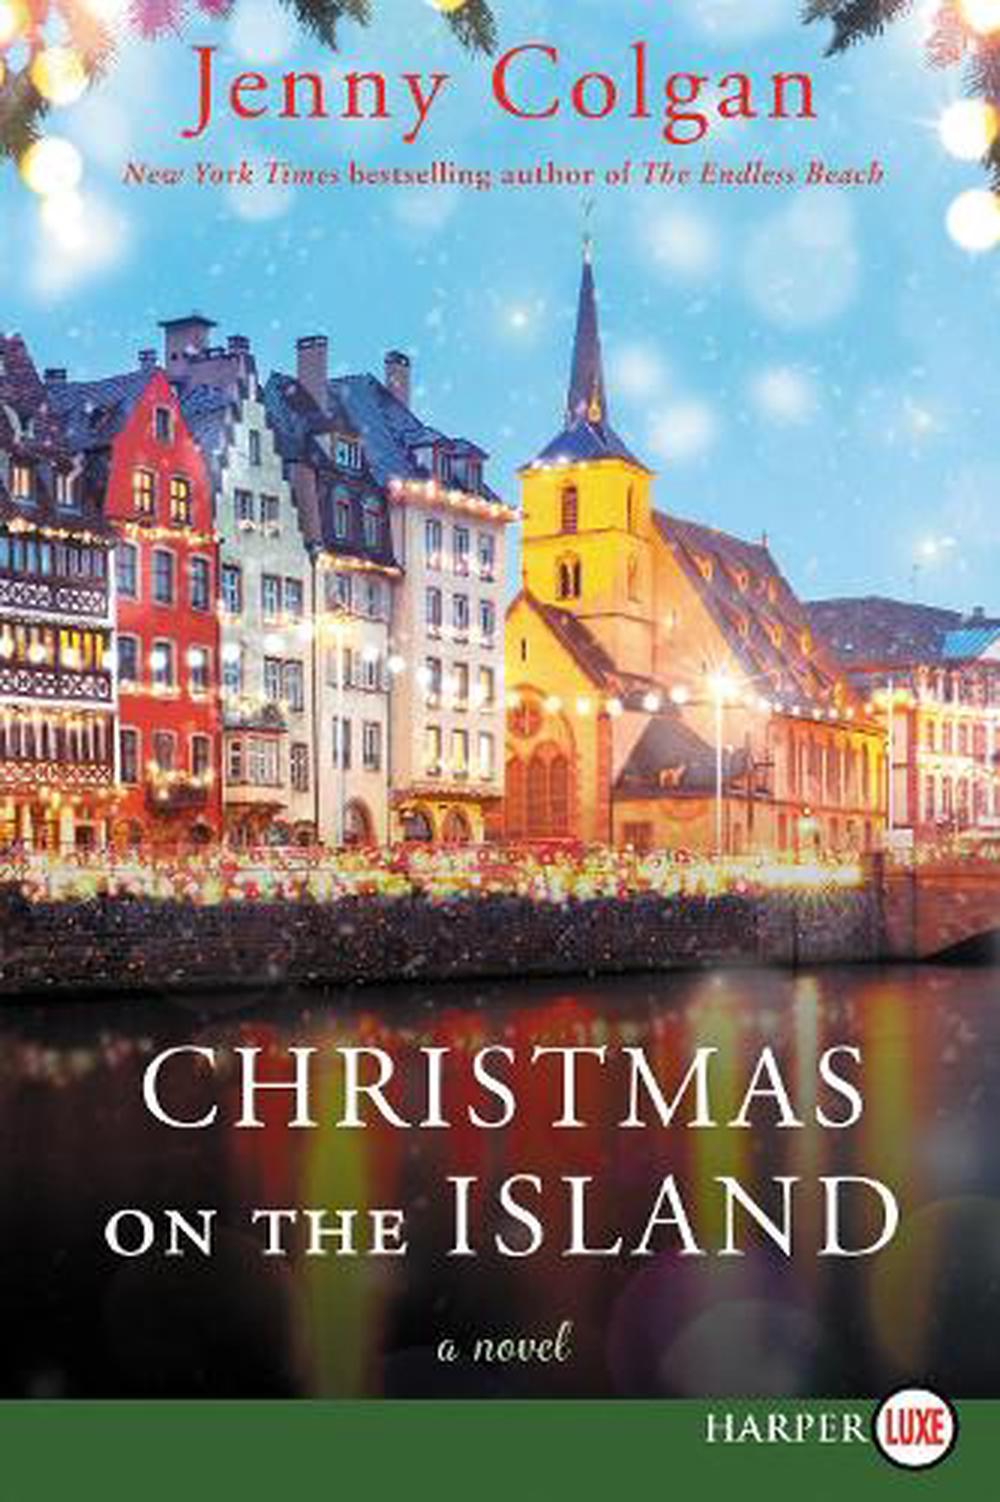 Christmas on the Island by Jenny Colgan (English) Paperback Book Free Shipping! 9780062864178 | eBay